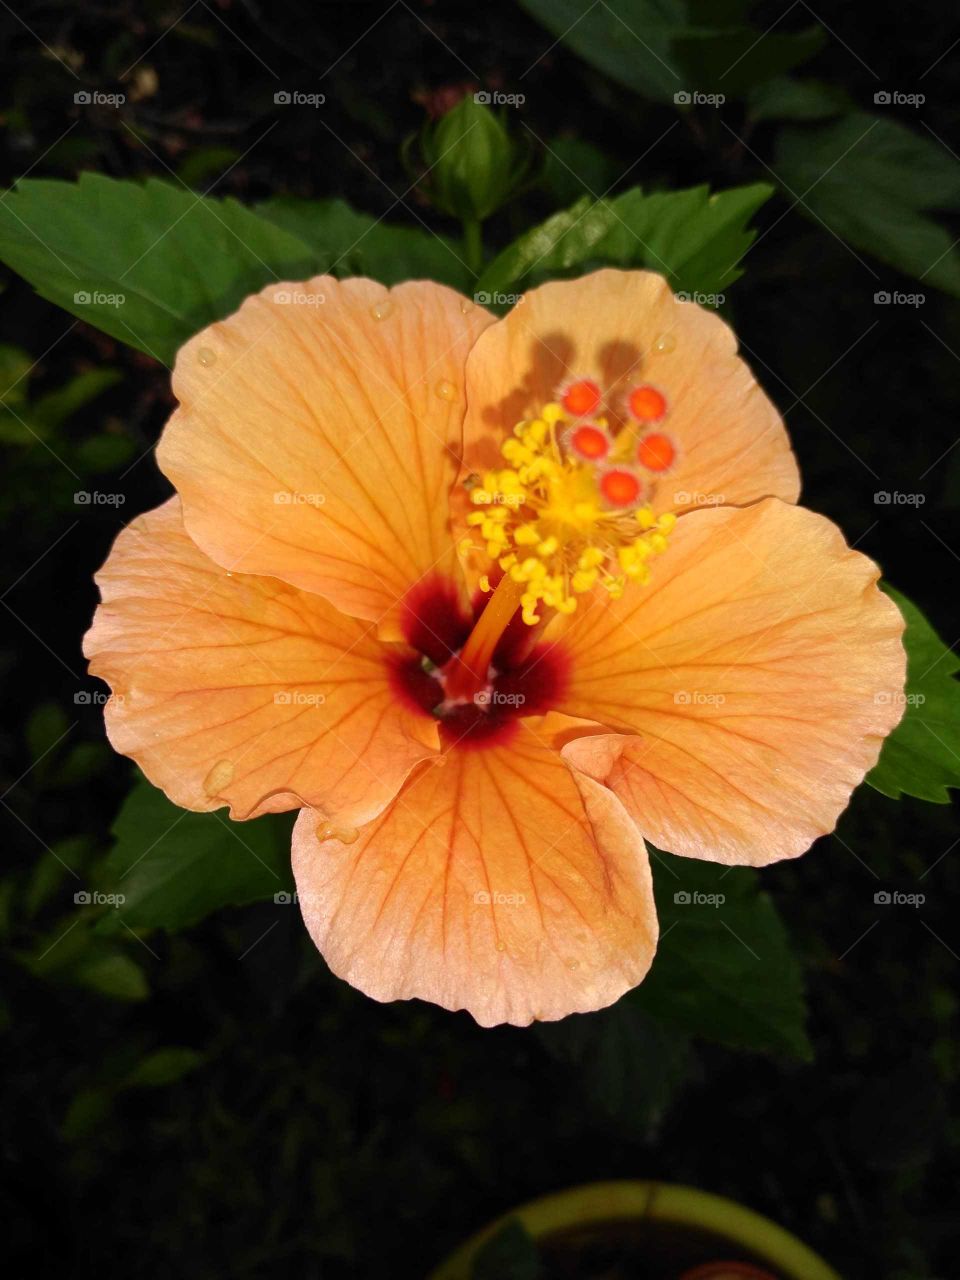 A beautiful orange hibiscus flower